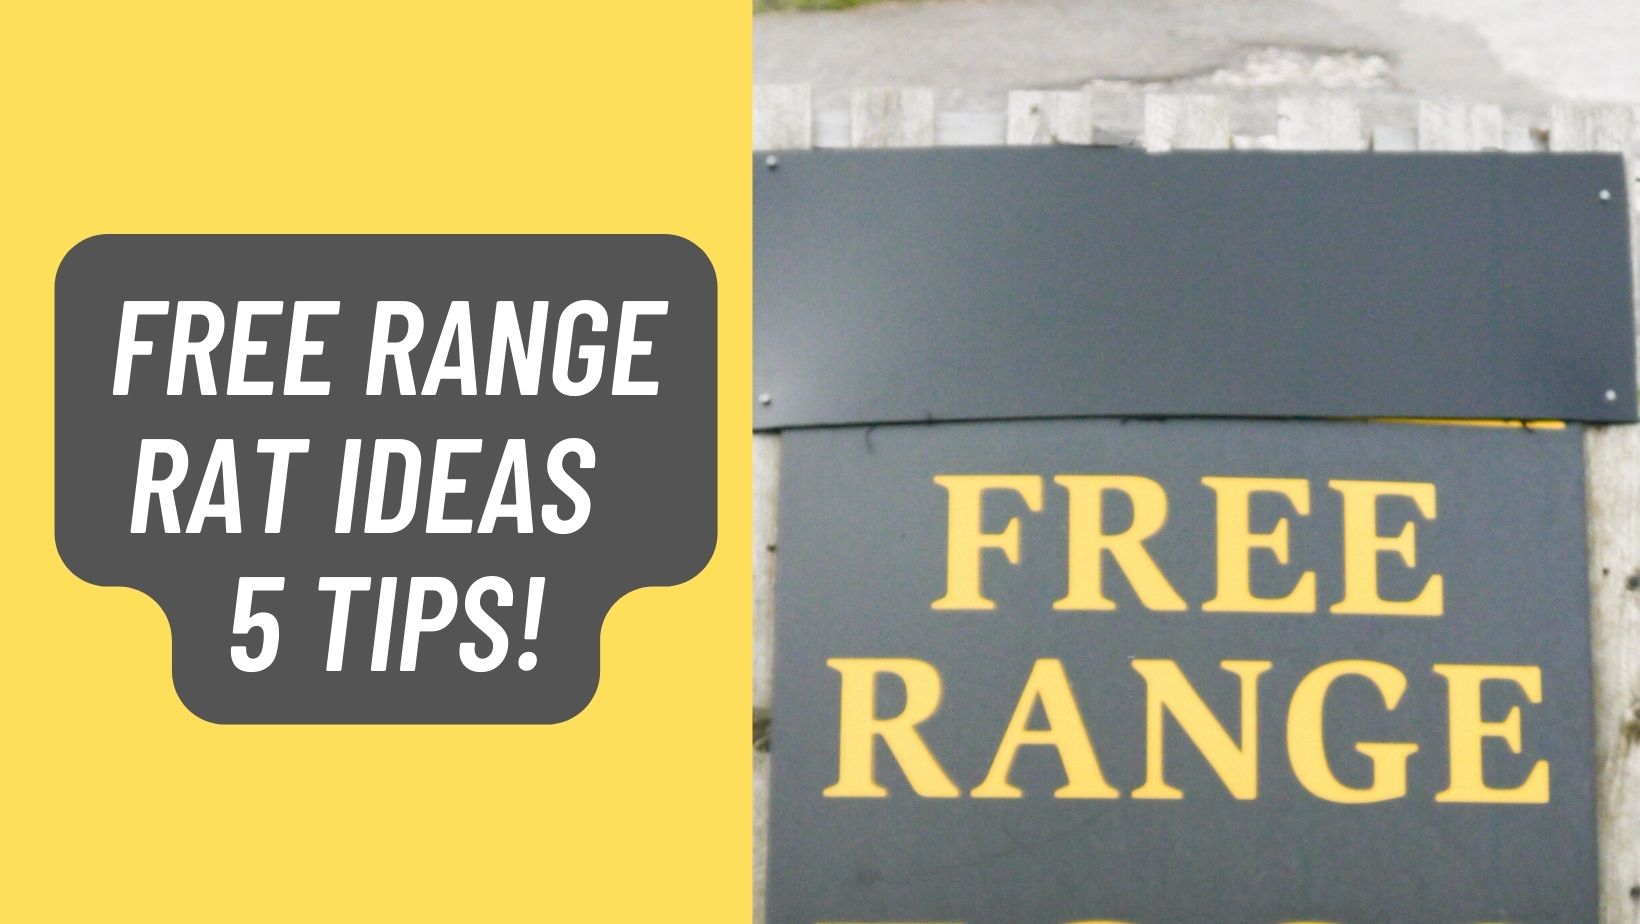 Free Range Rat Ideas – 5 Tips!